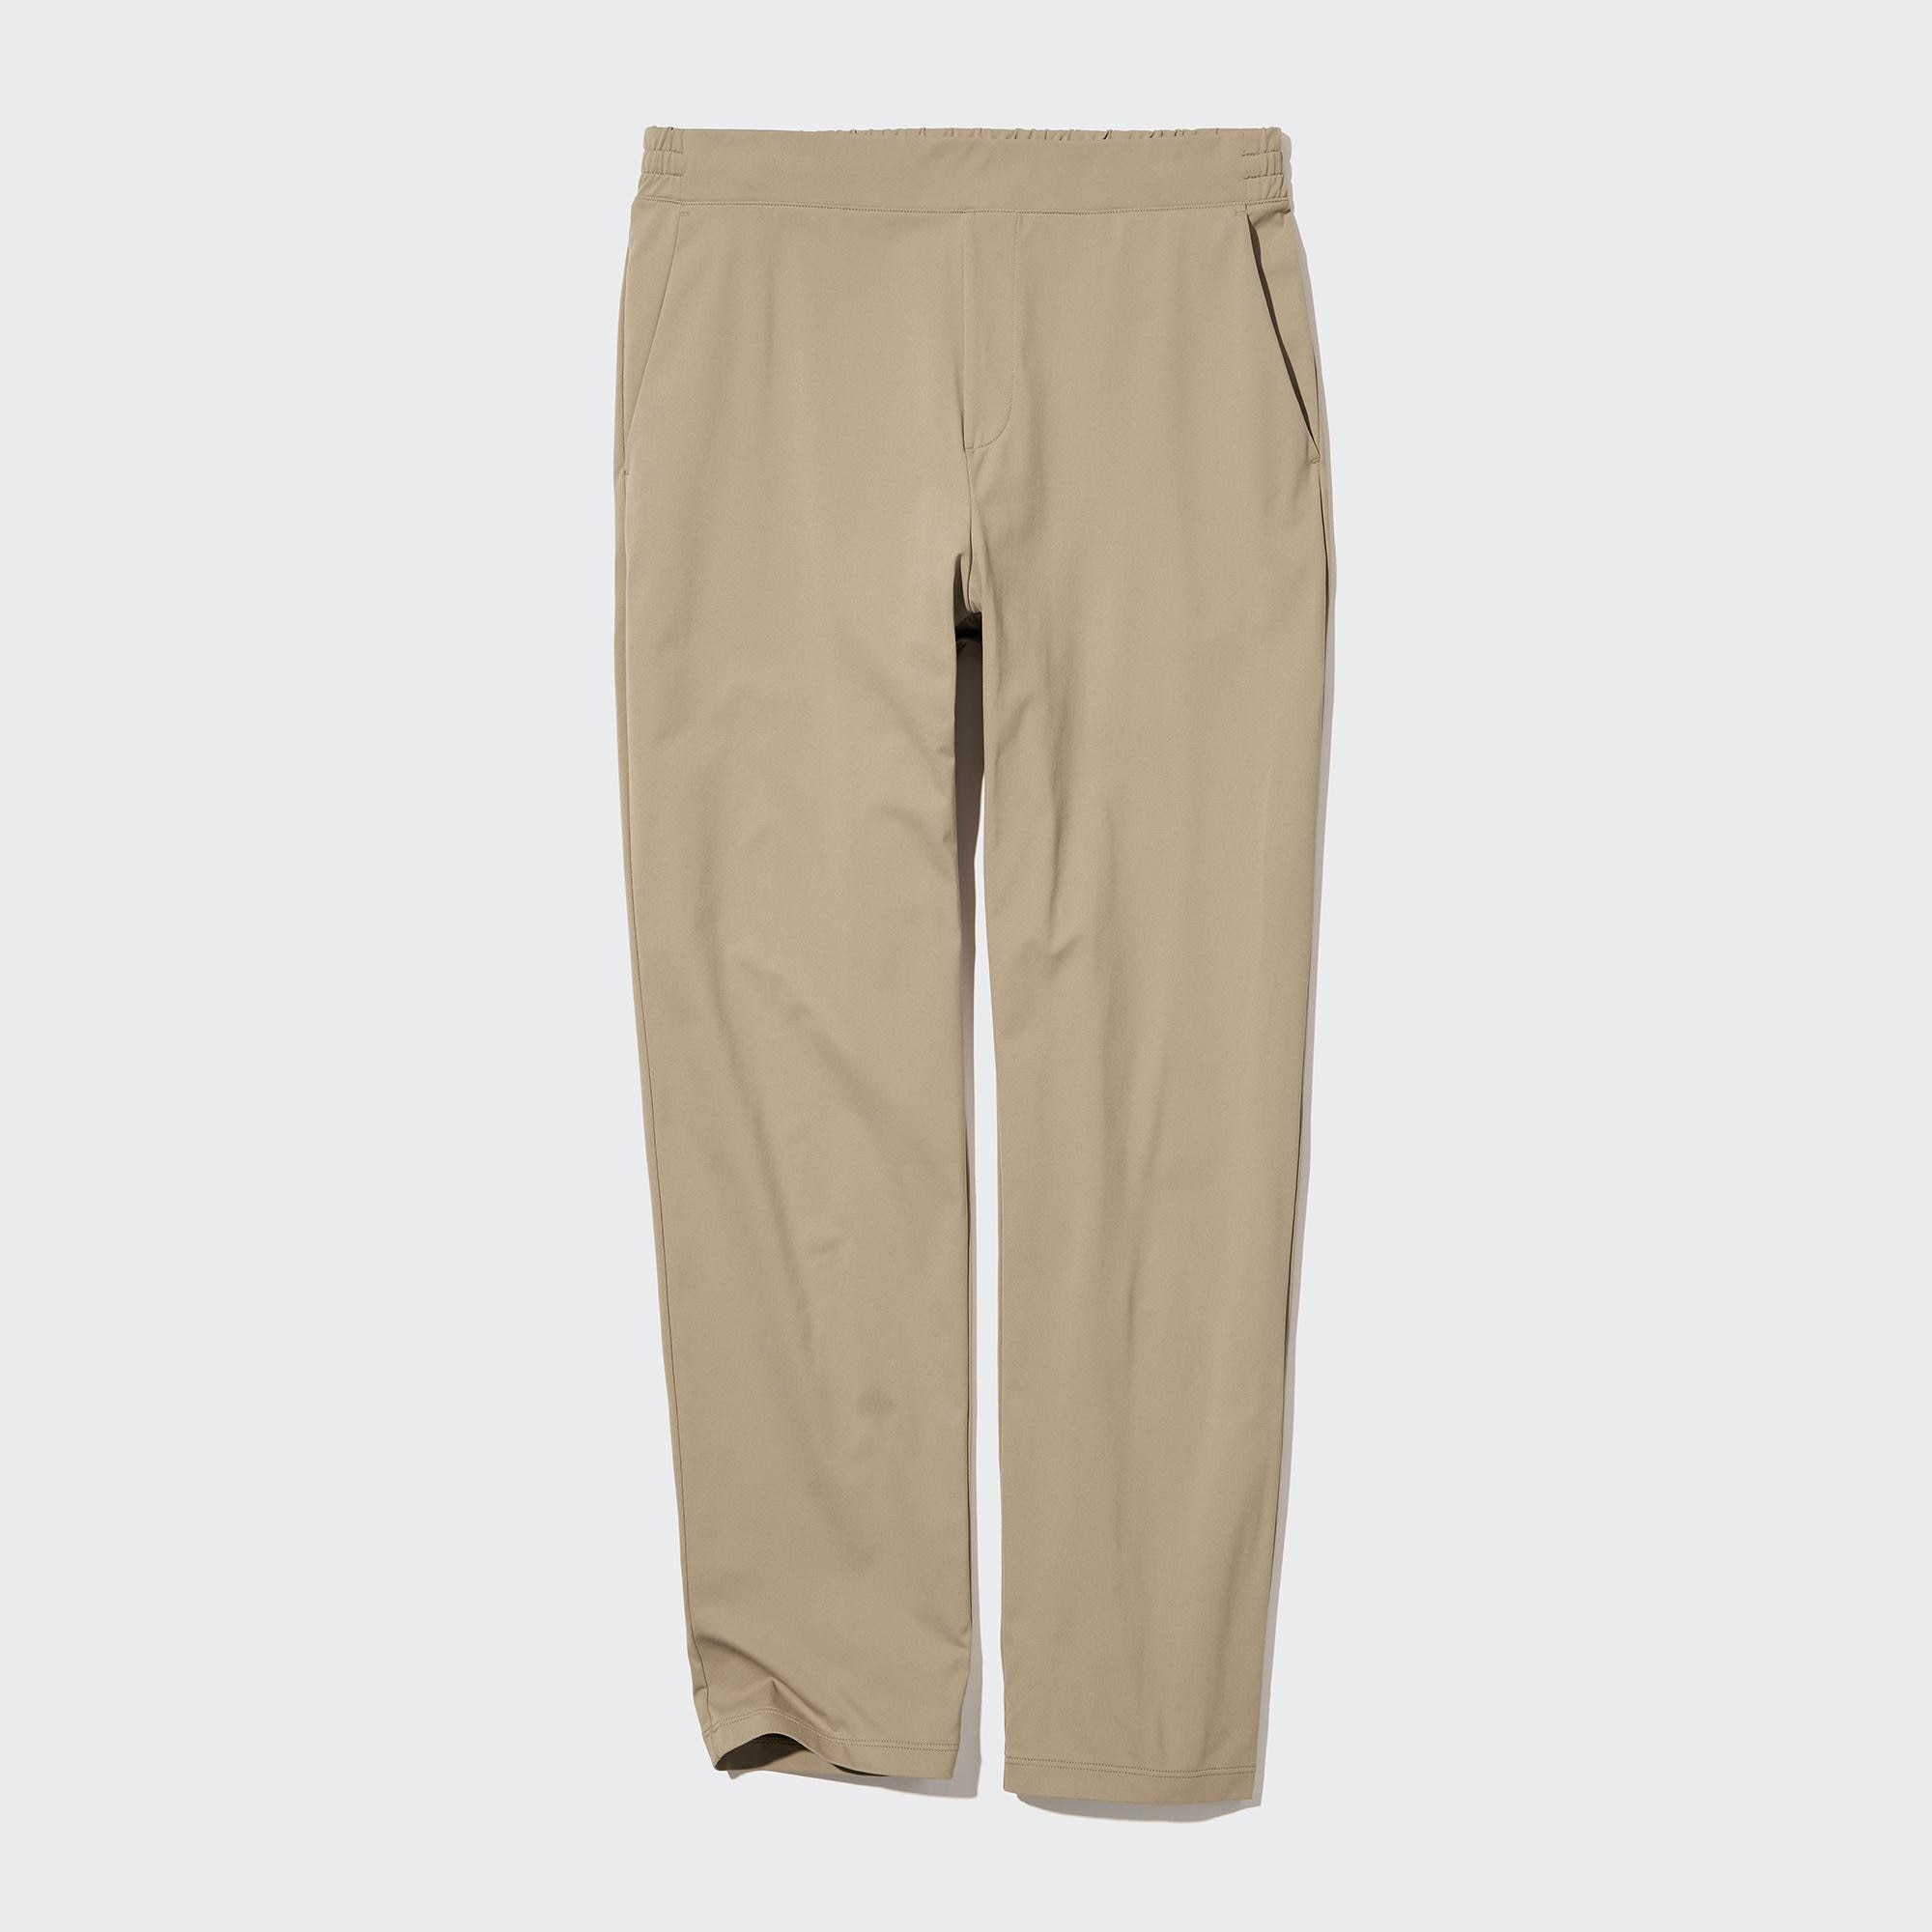 The $29.90 Uniqlo pants that look like denim and feel like leggings.